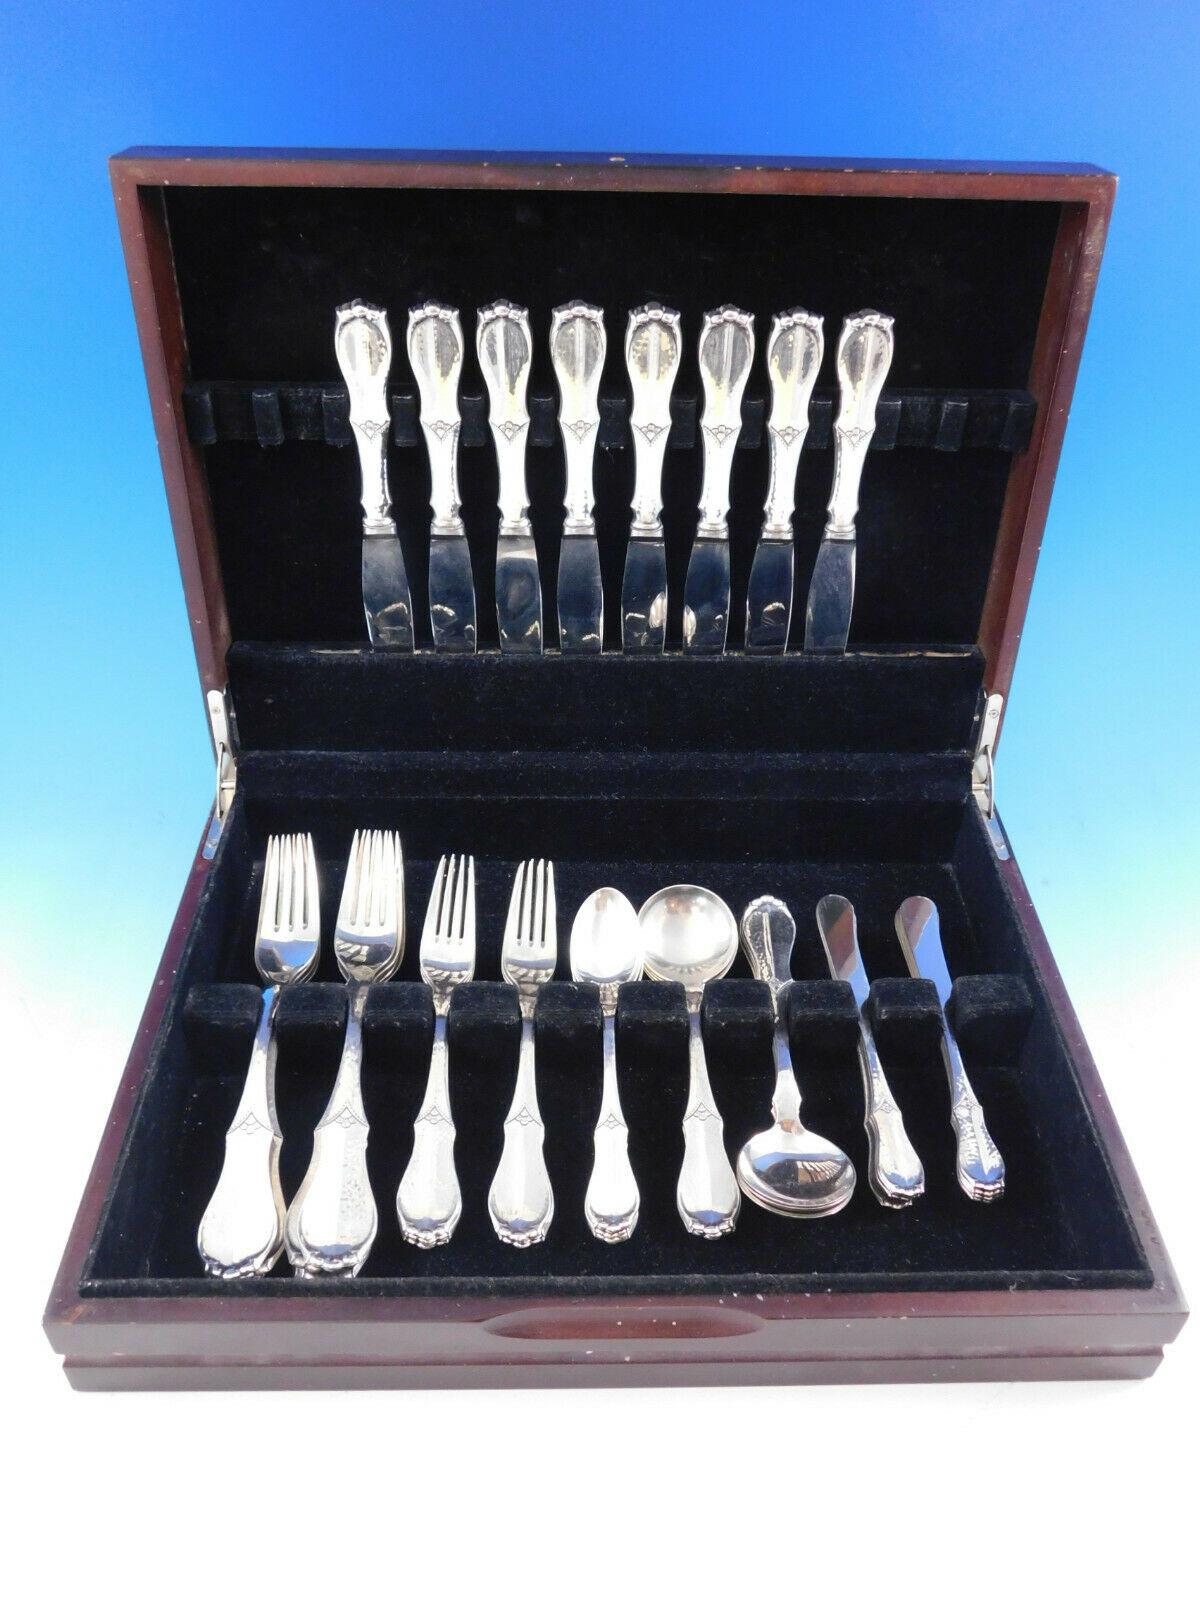 Hand wrought Danish sterling silver flatware set by Copenhagen Silver Industry Ltd. - 46 pieces. This set includes:

Bonus8 dinner forks, 7 7/8